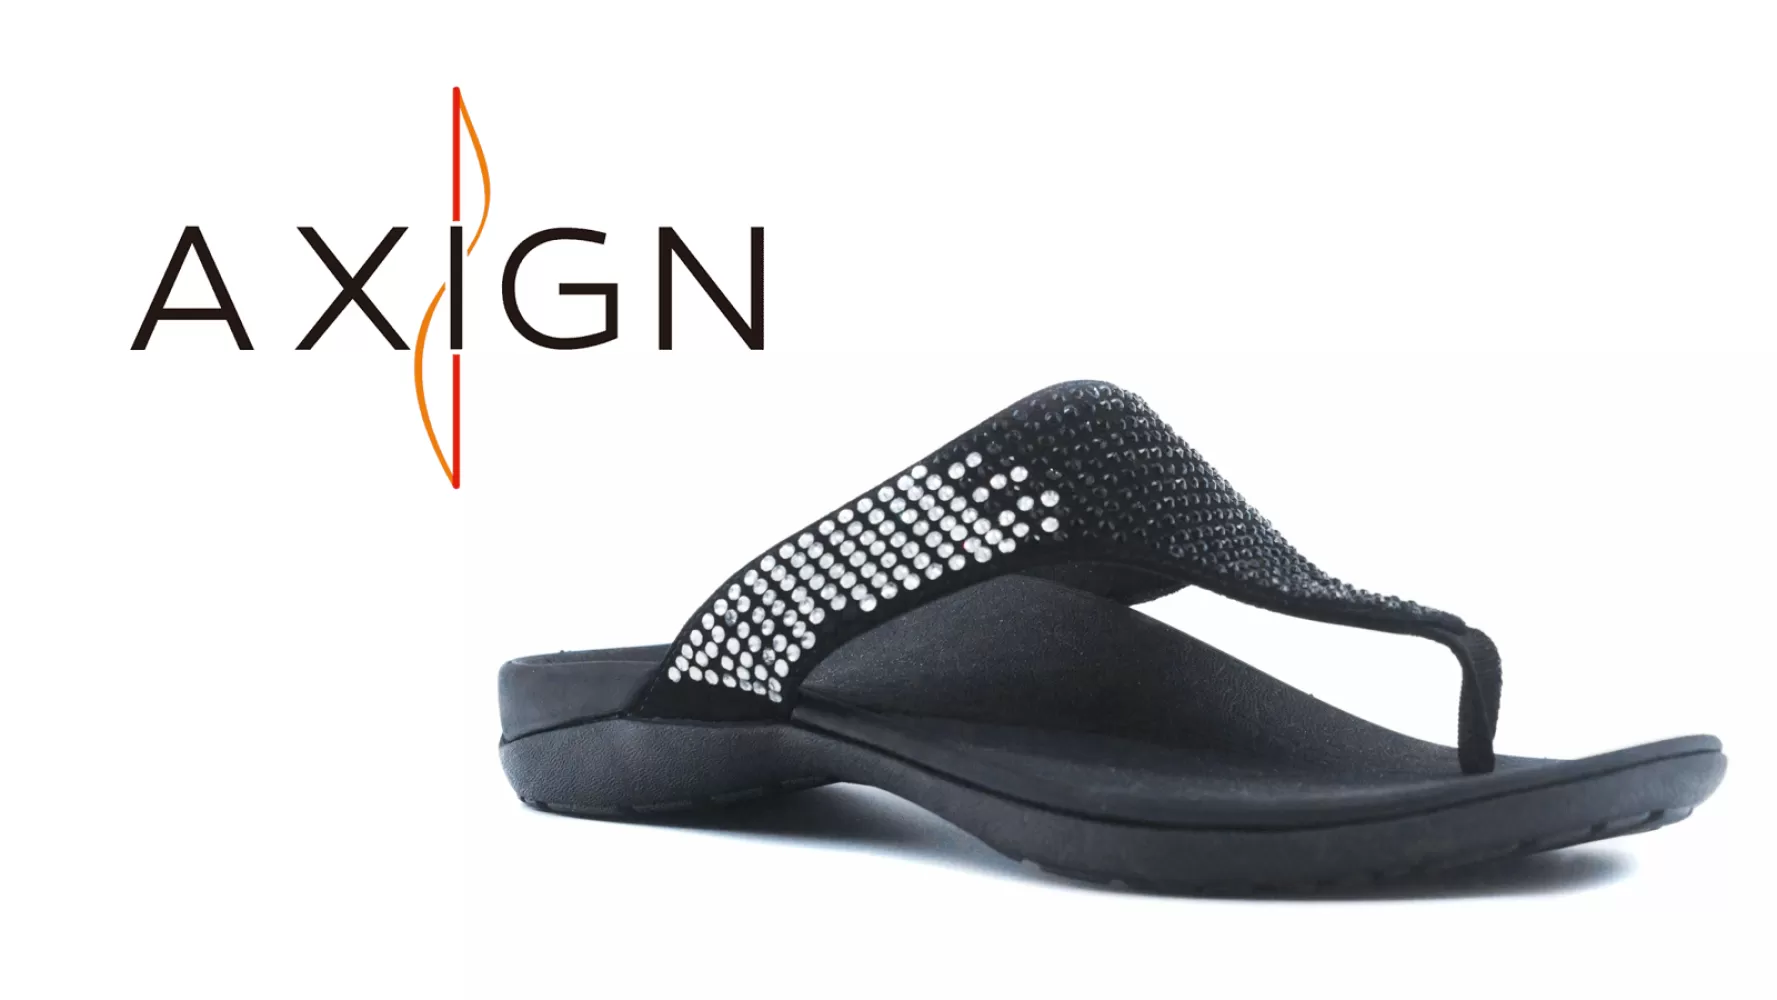 AXIGN ALEXA FlipFlops Stylish Sandals